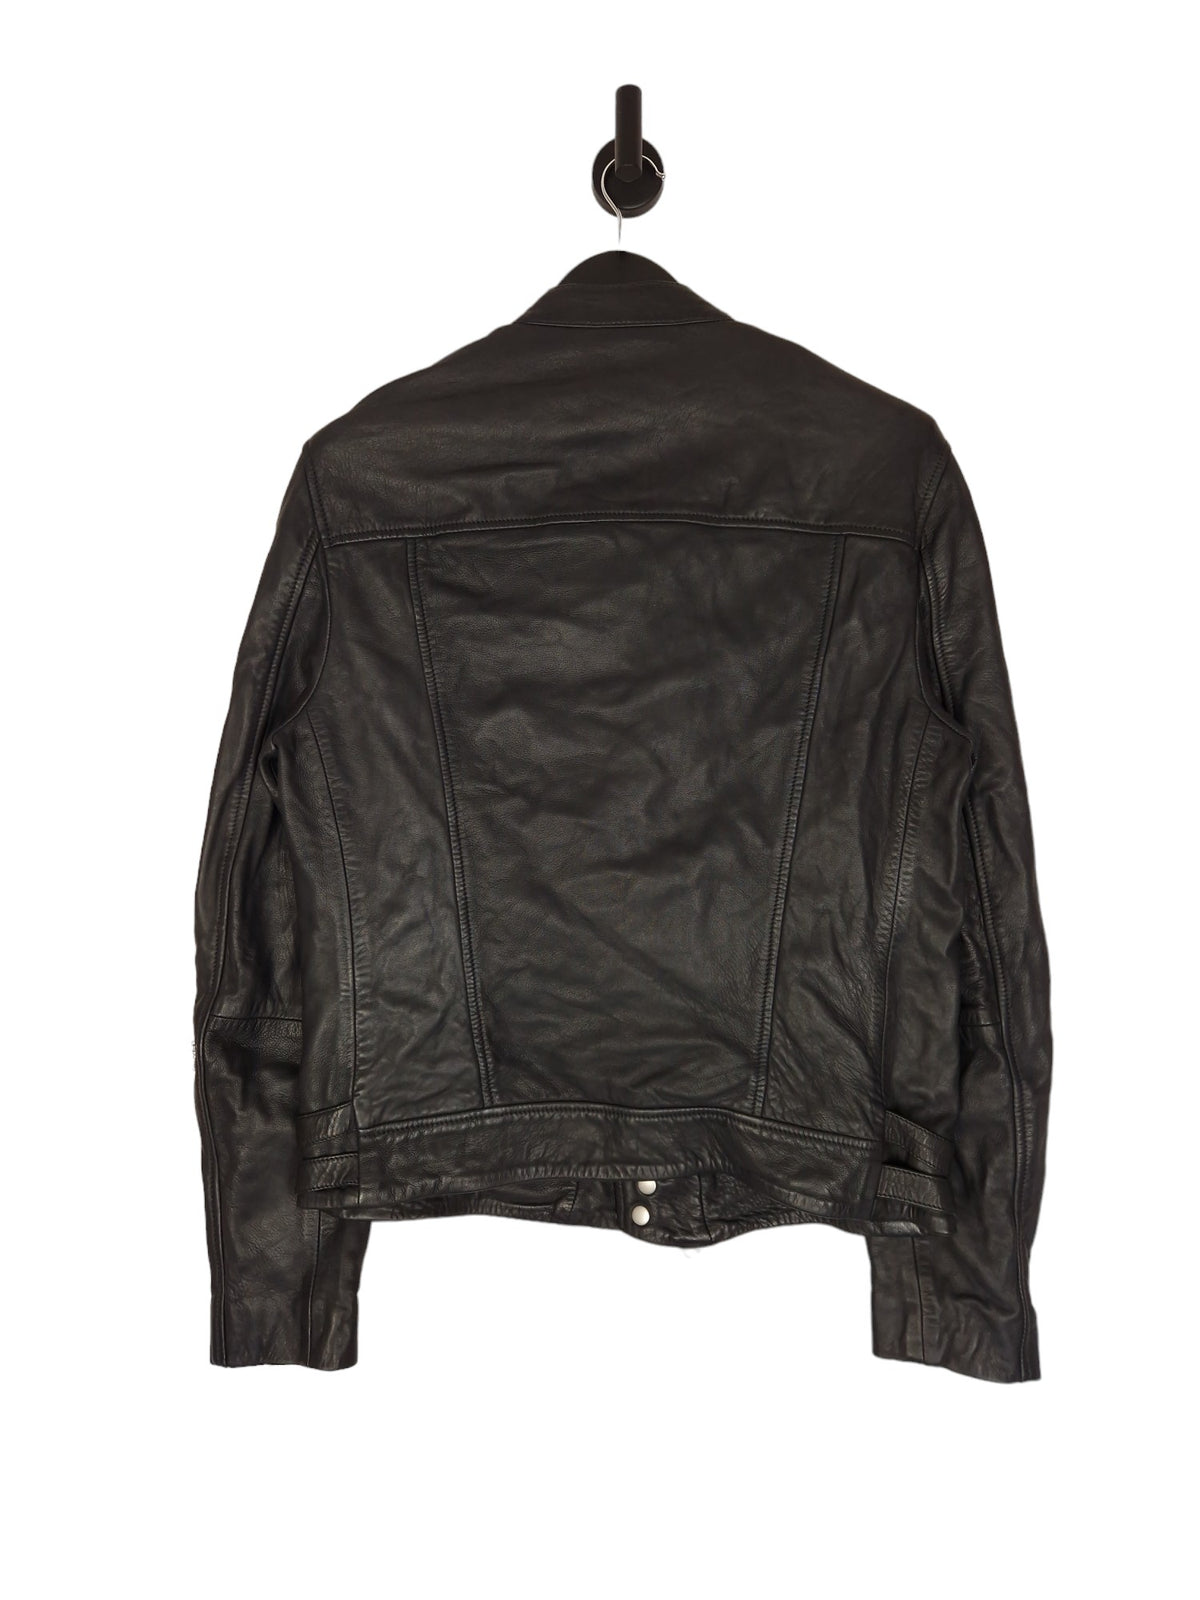 All Saints Leather Jacket - Size Medium